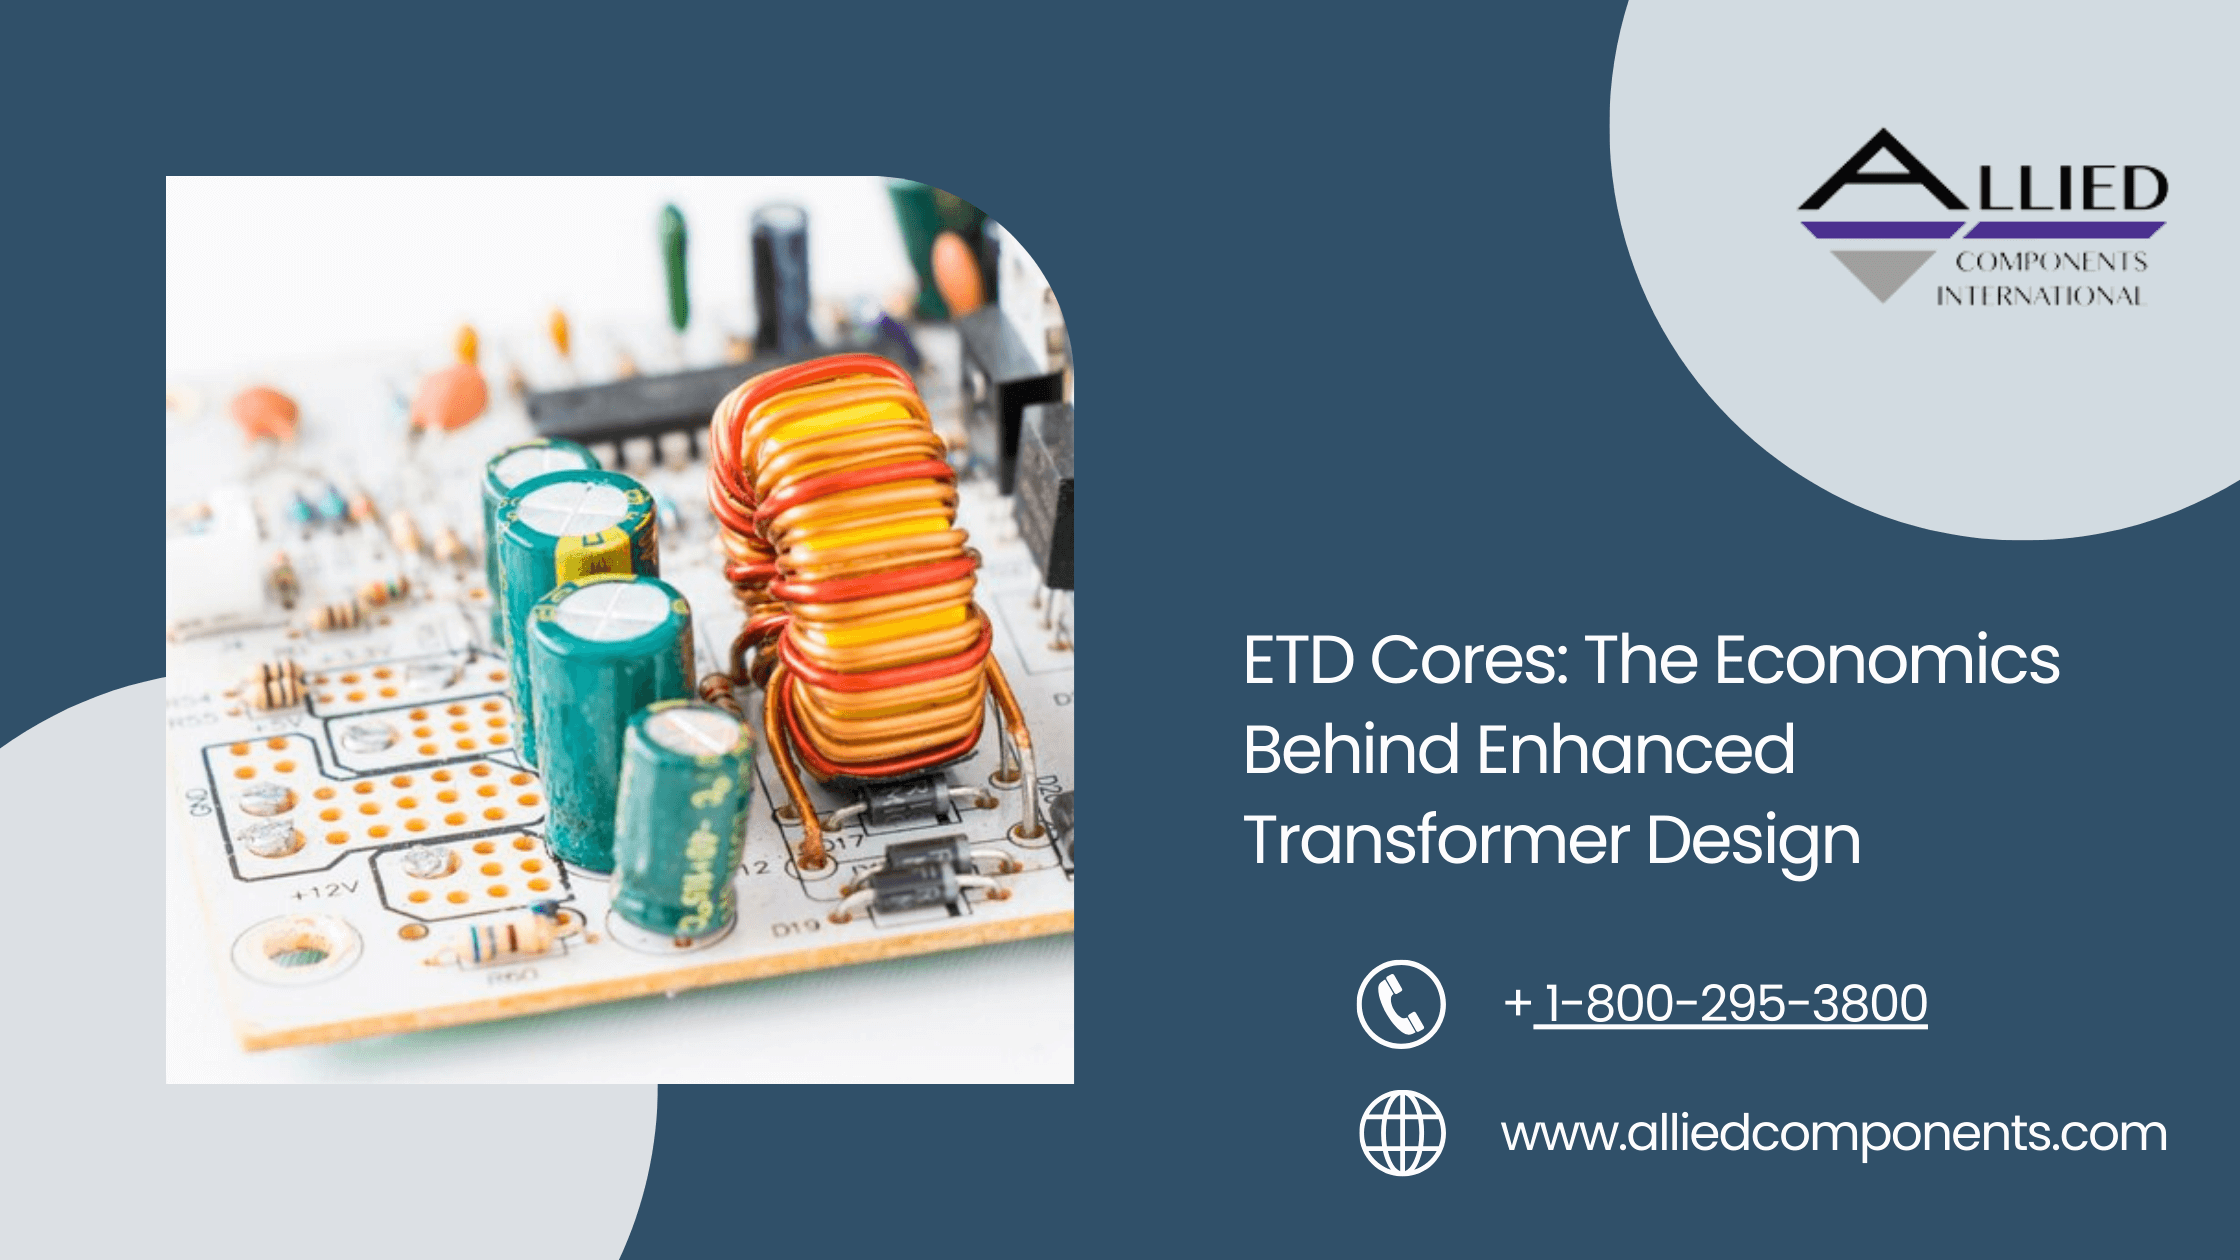 ETD Cores: The Economics Behind Enhanced Transformer Design